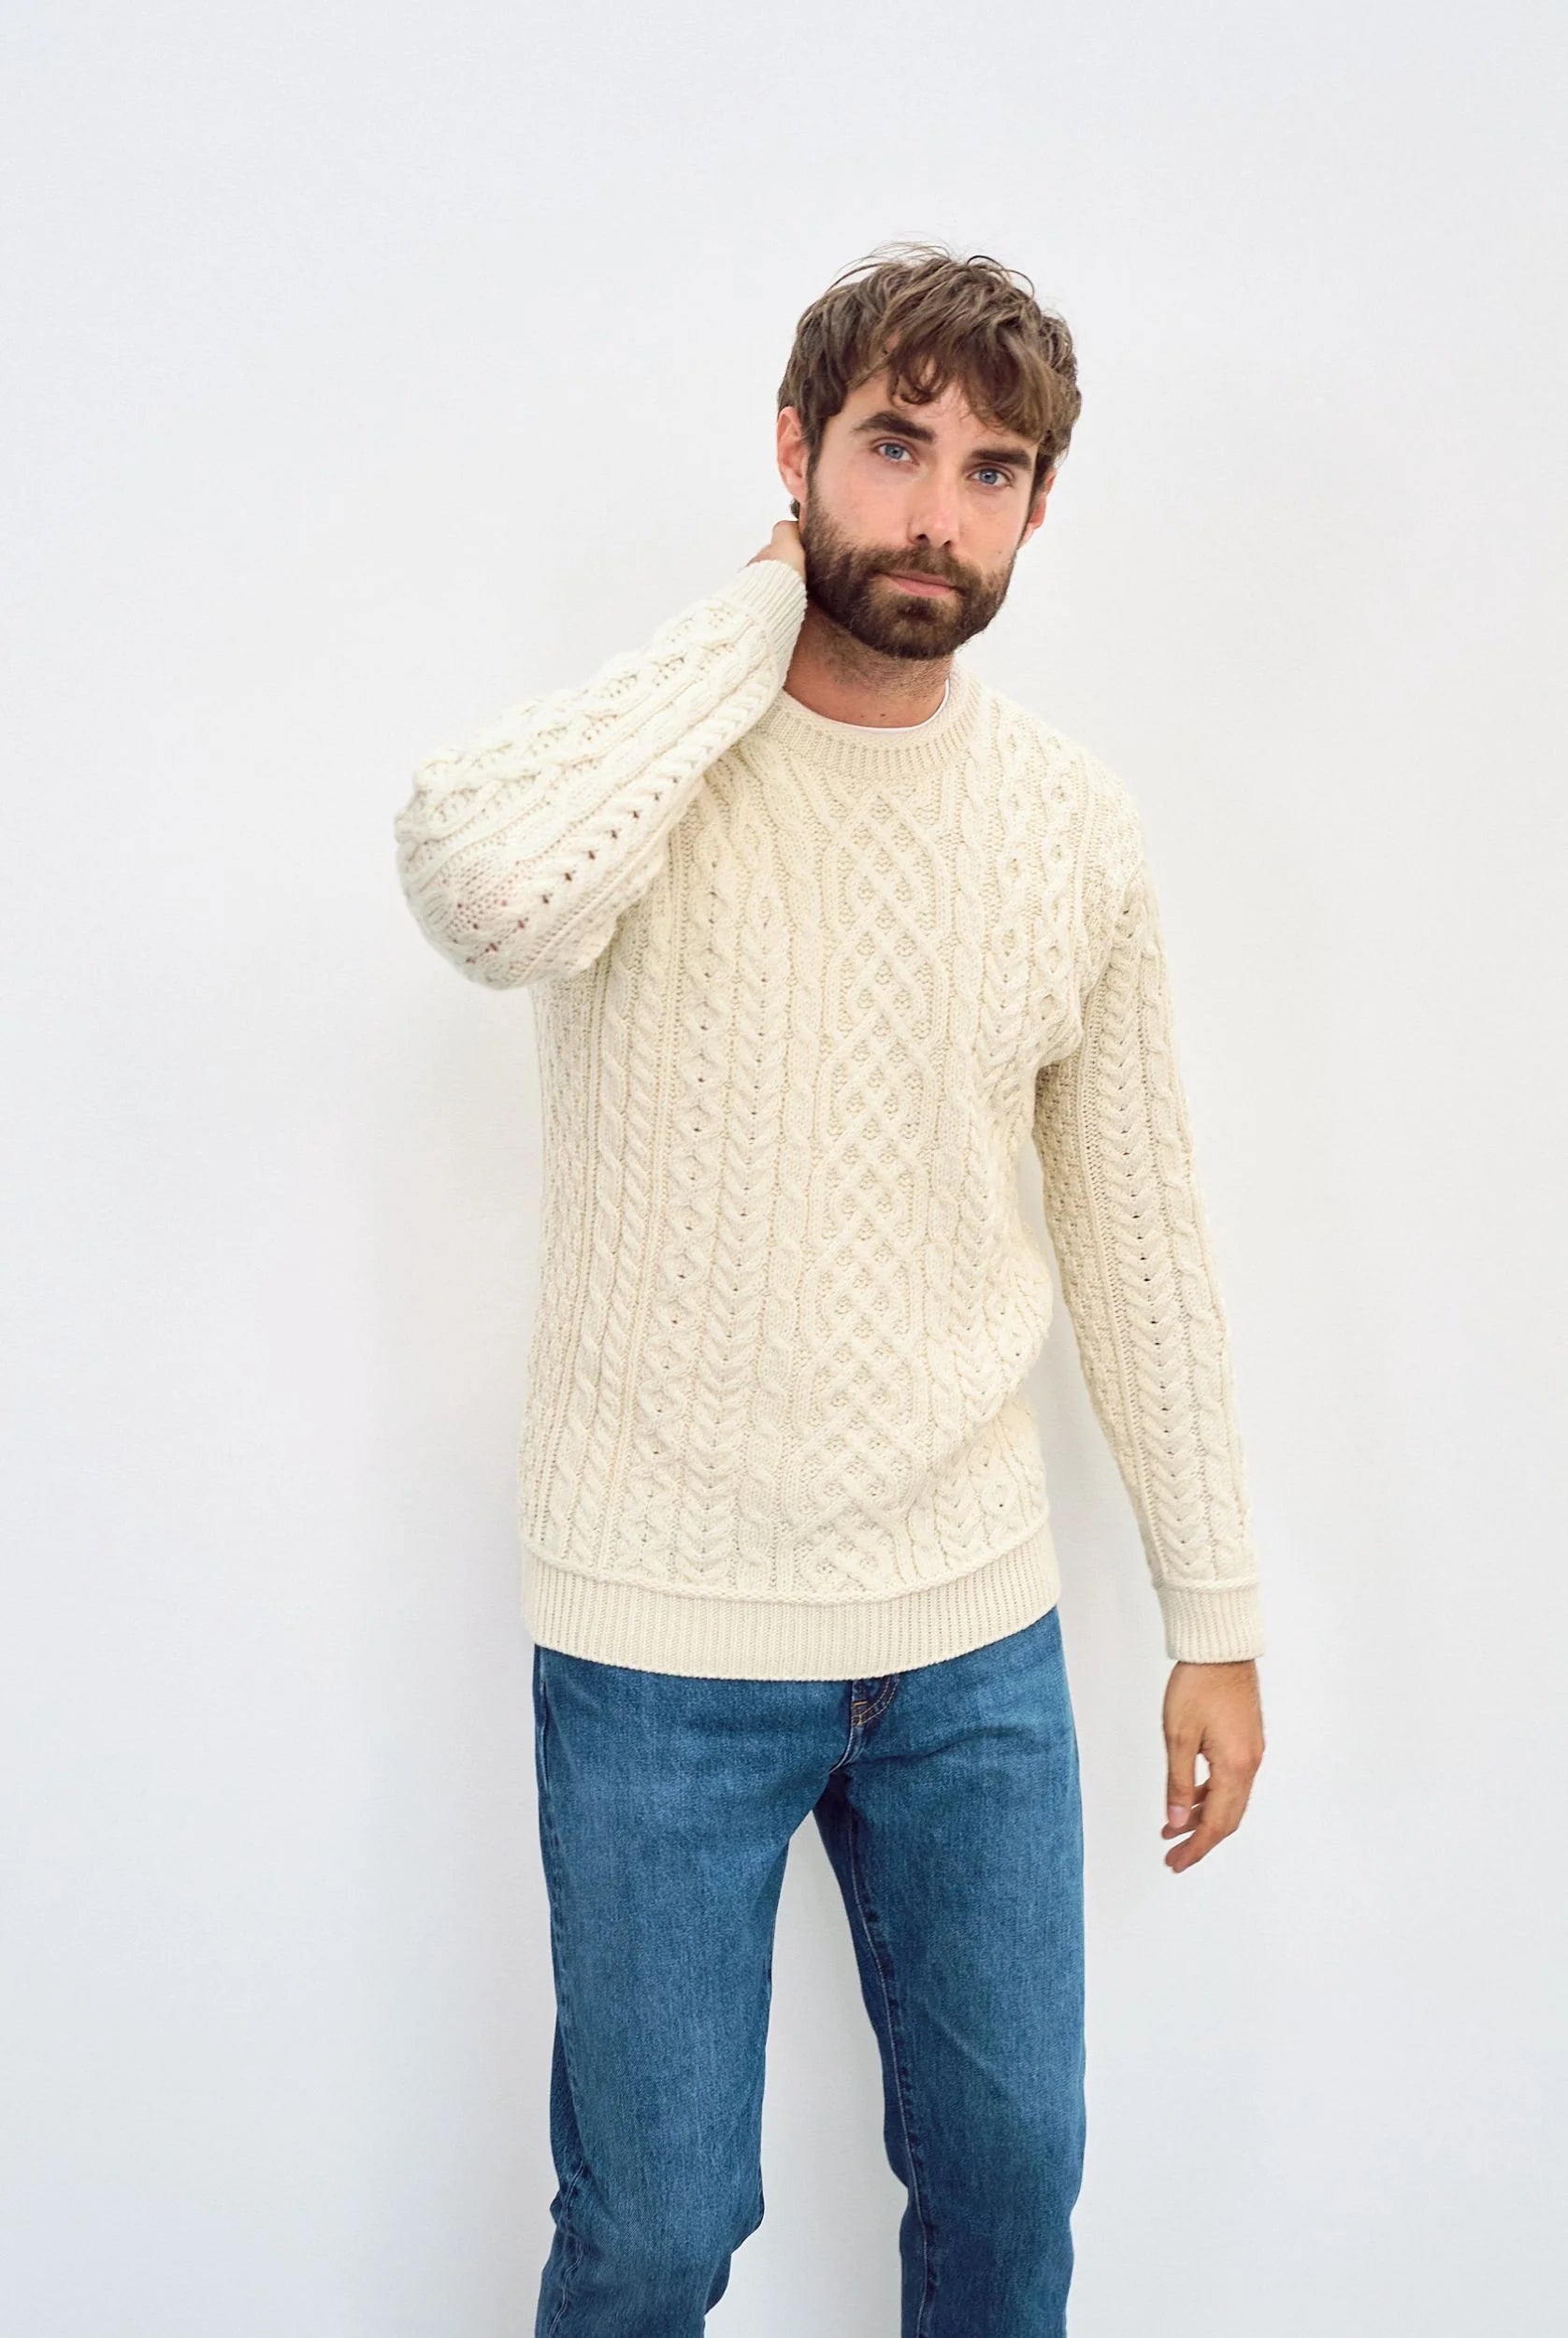 Inishturk Mens Aran Sweater - Cream B420 367